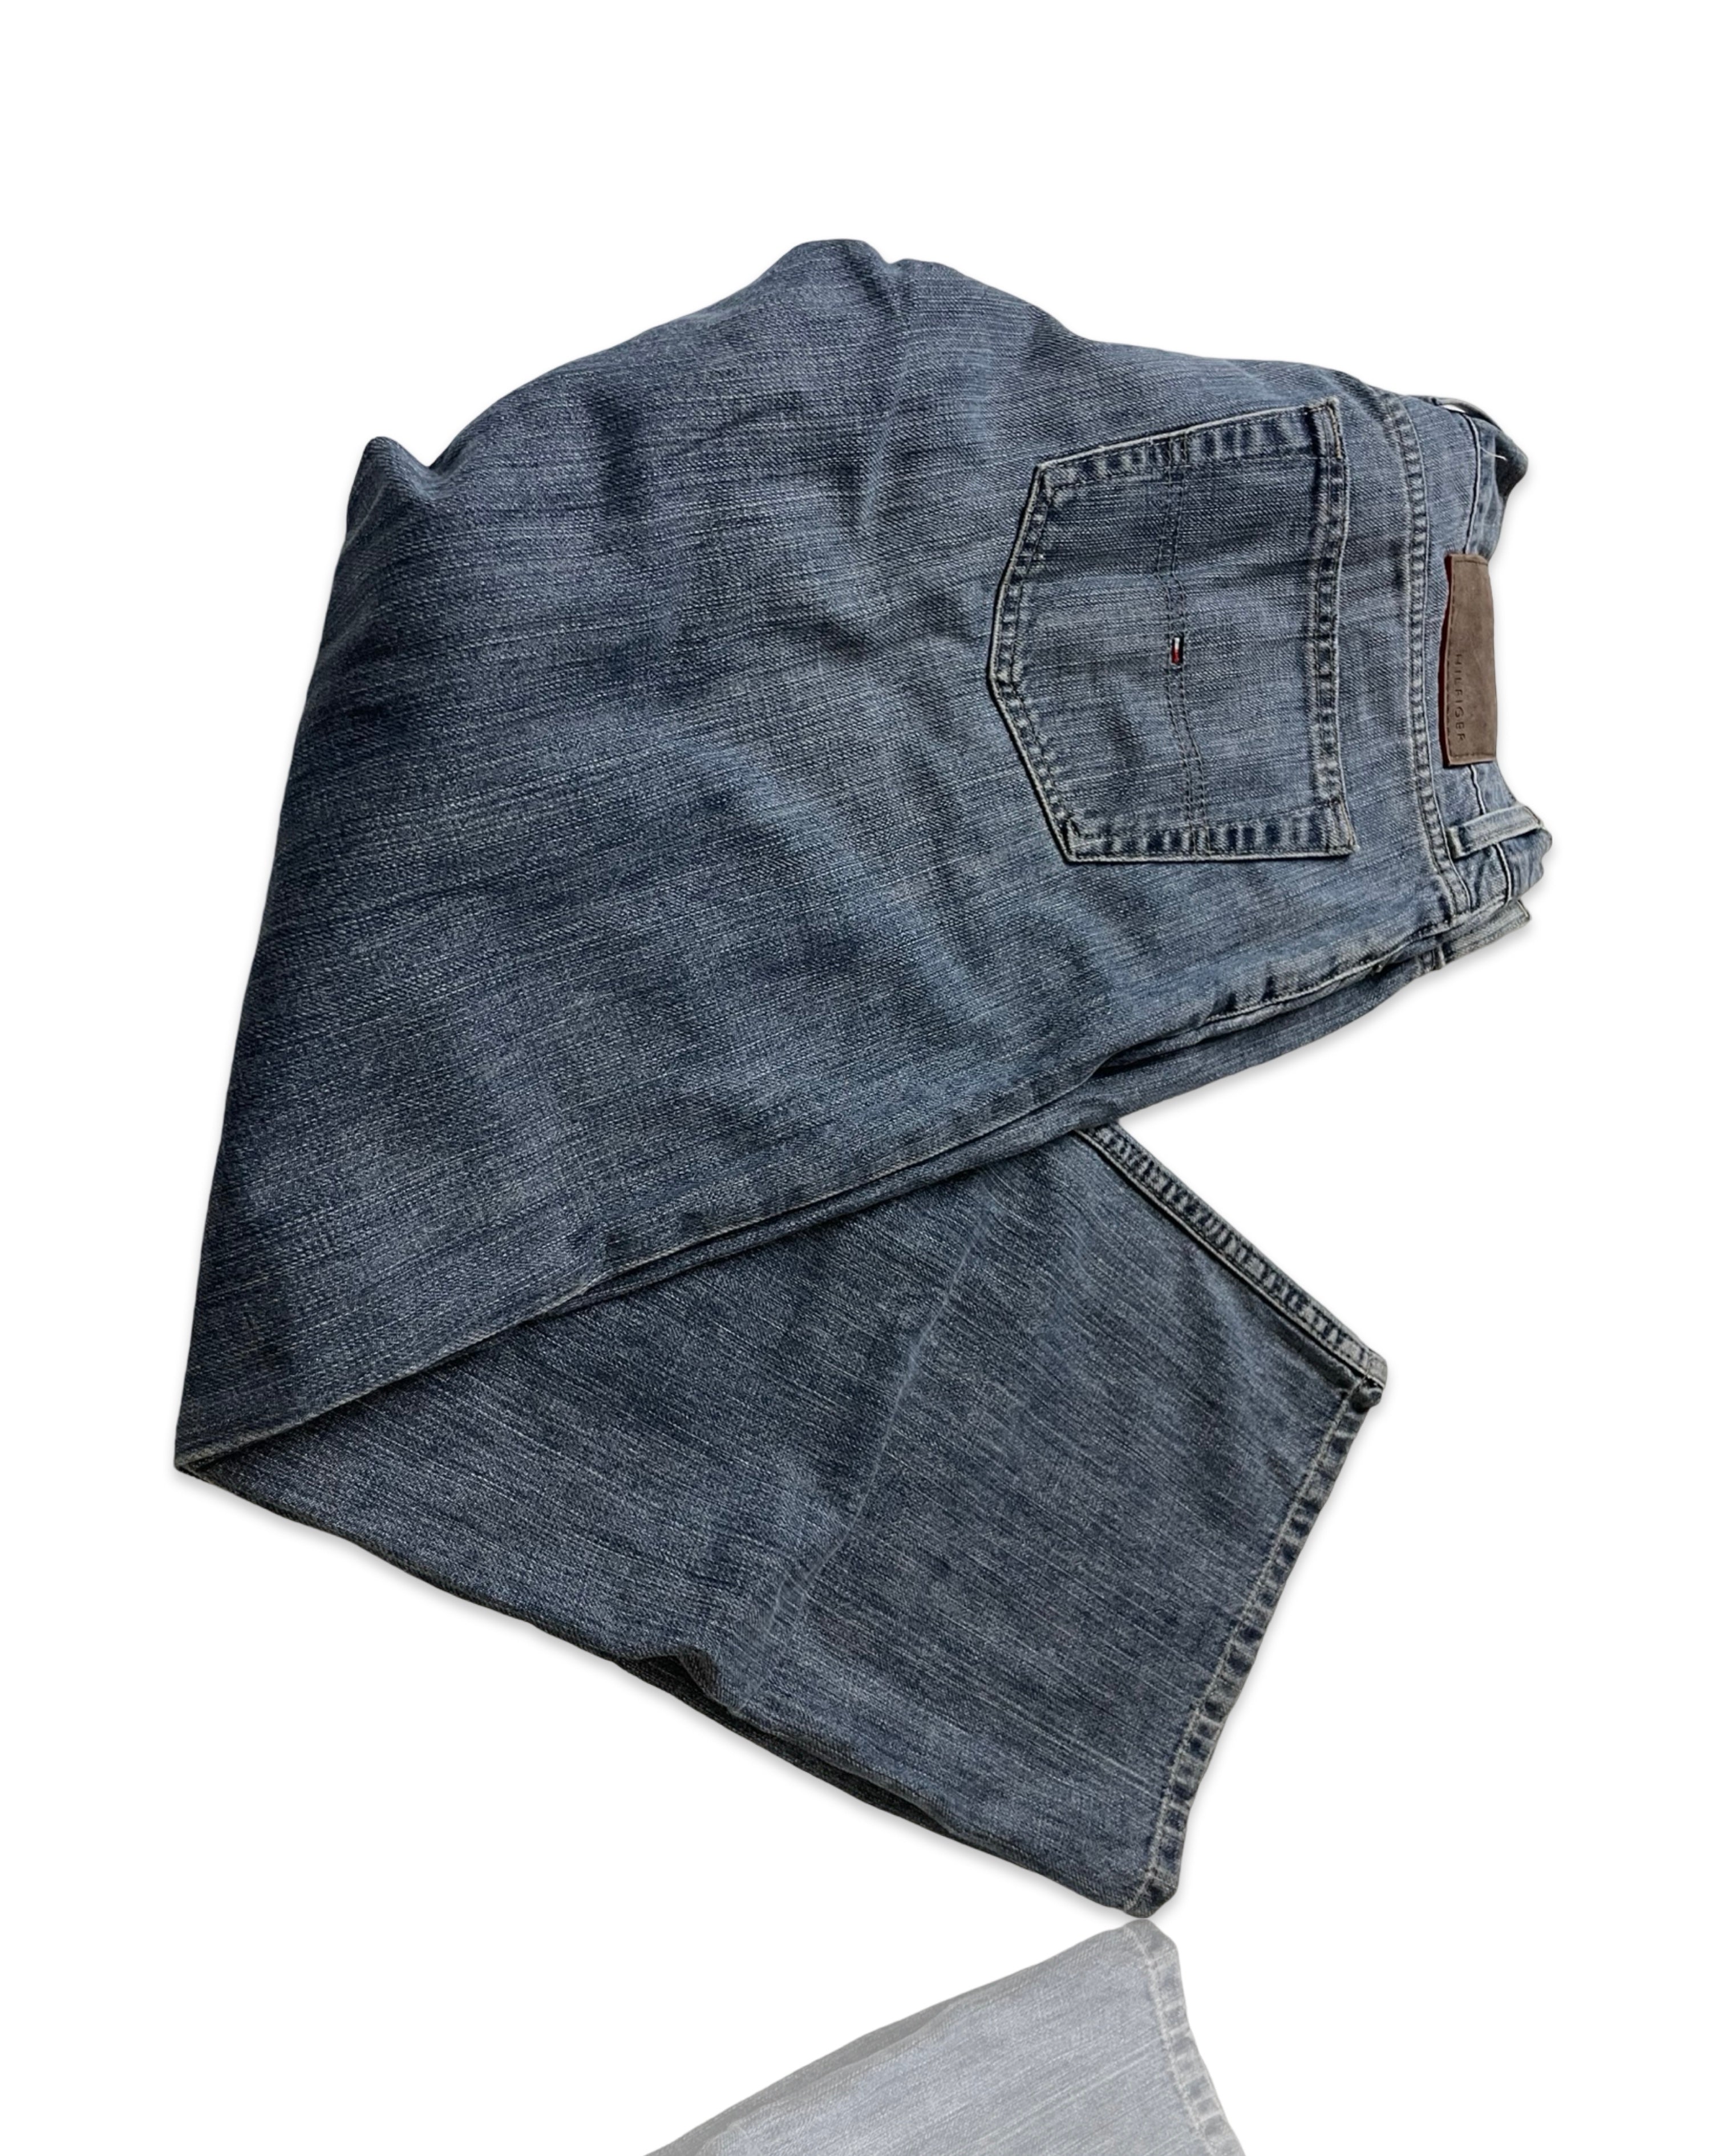 Vintage Tommy Hilfiger Brooklyn Regular Fit Men's Jeans in a classic blue jean , sized W34 L30 |SKU 4246